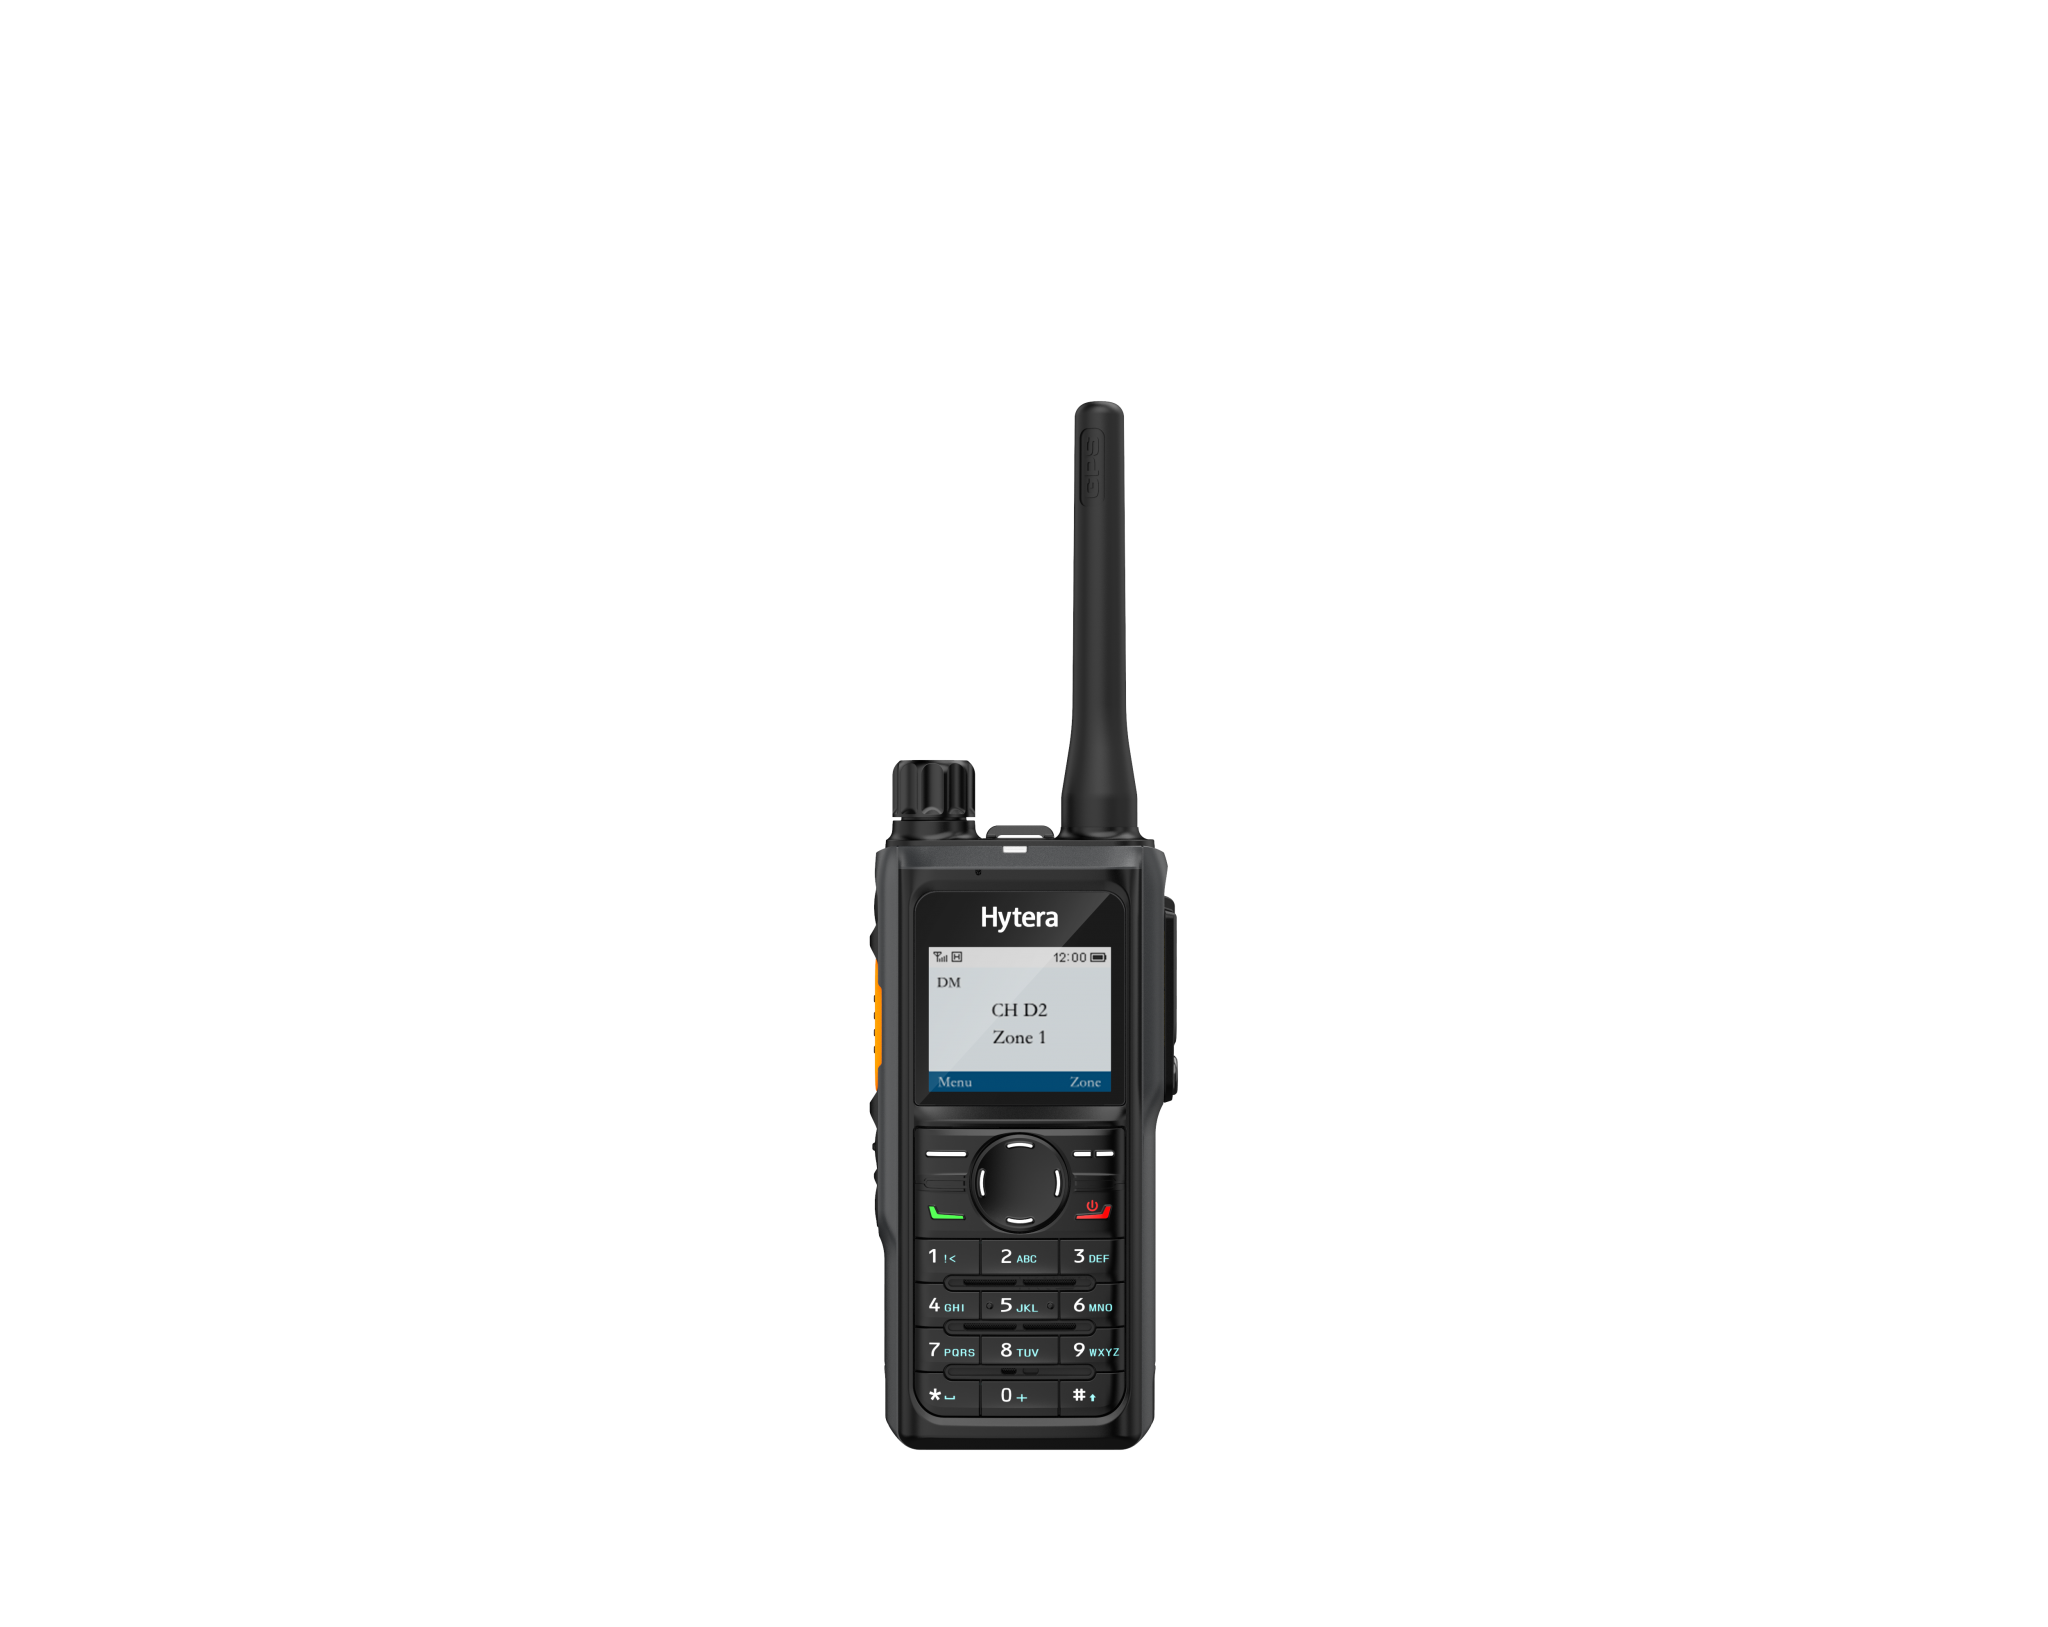 Hytera HP682 DMR Digital Portable Two Way Radio